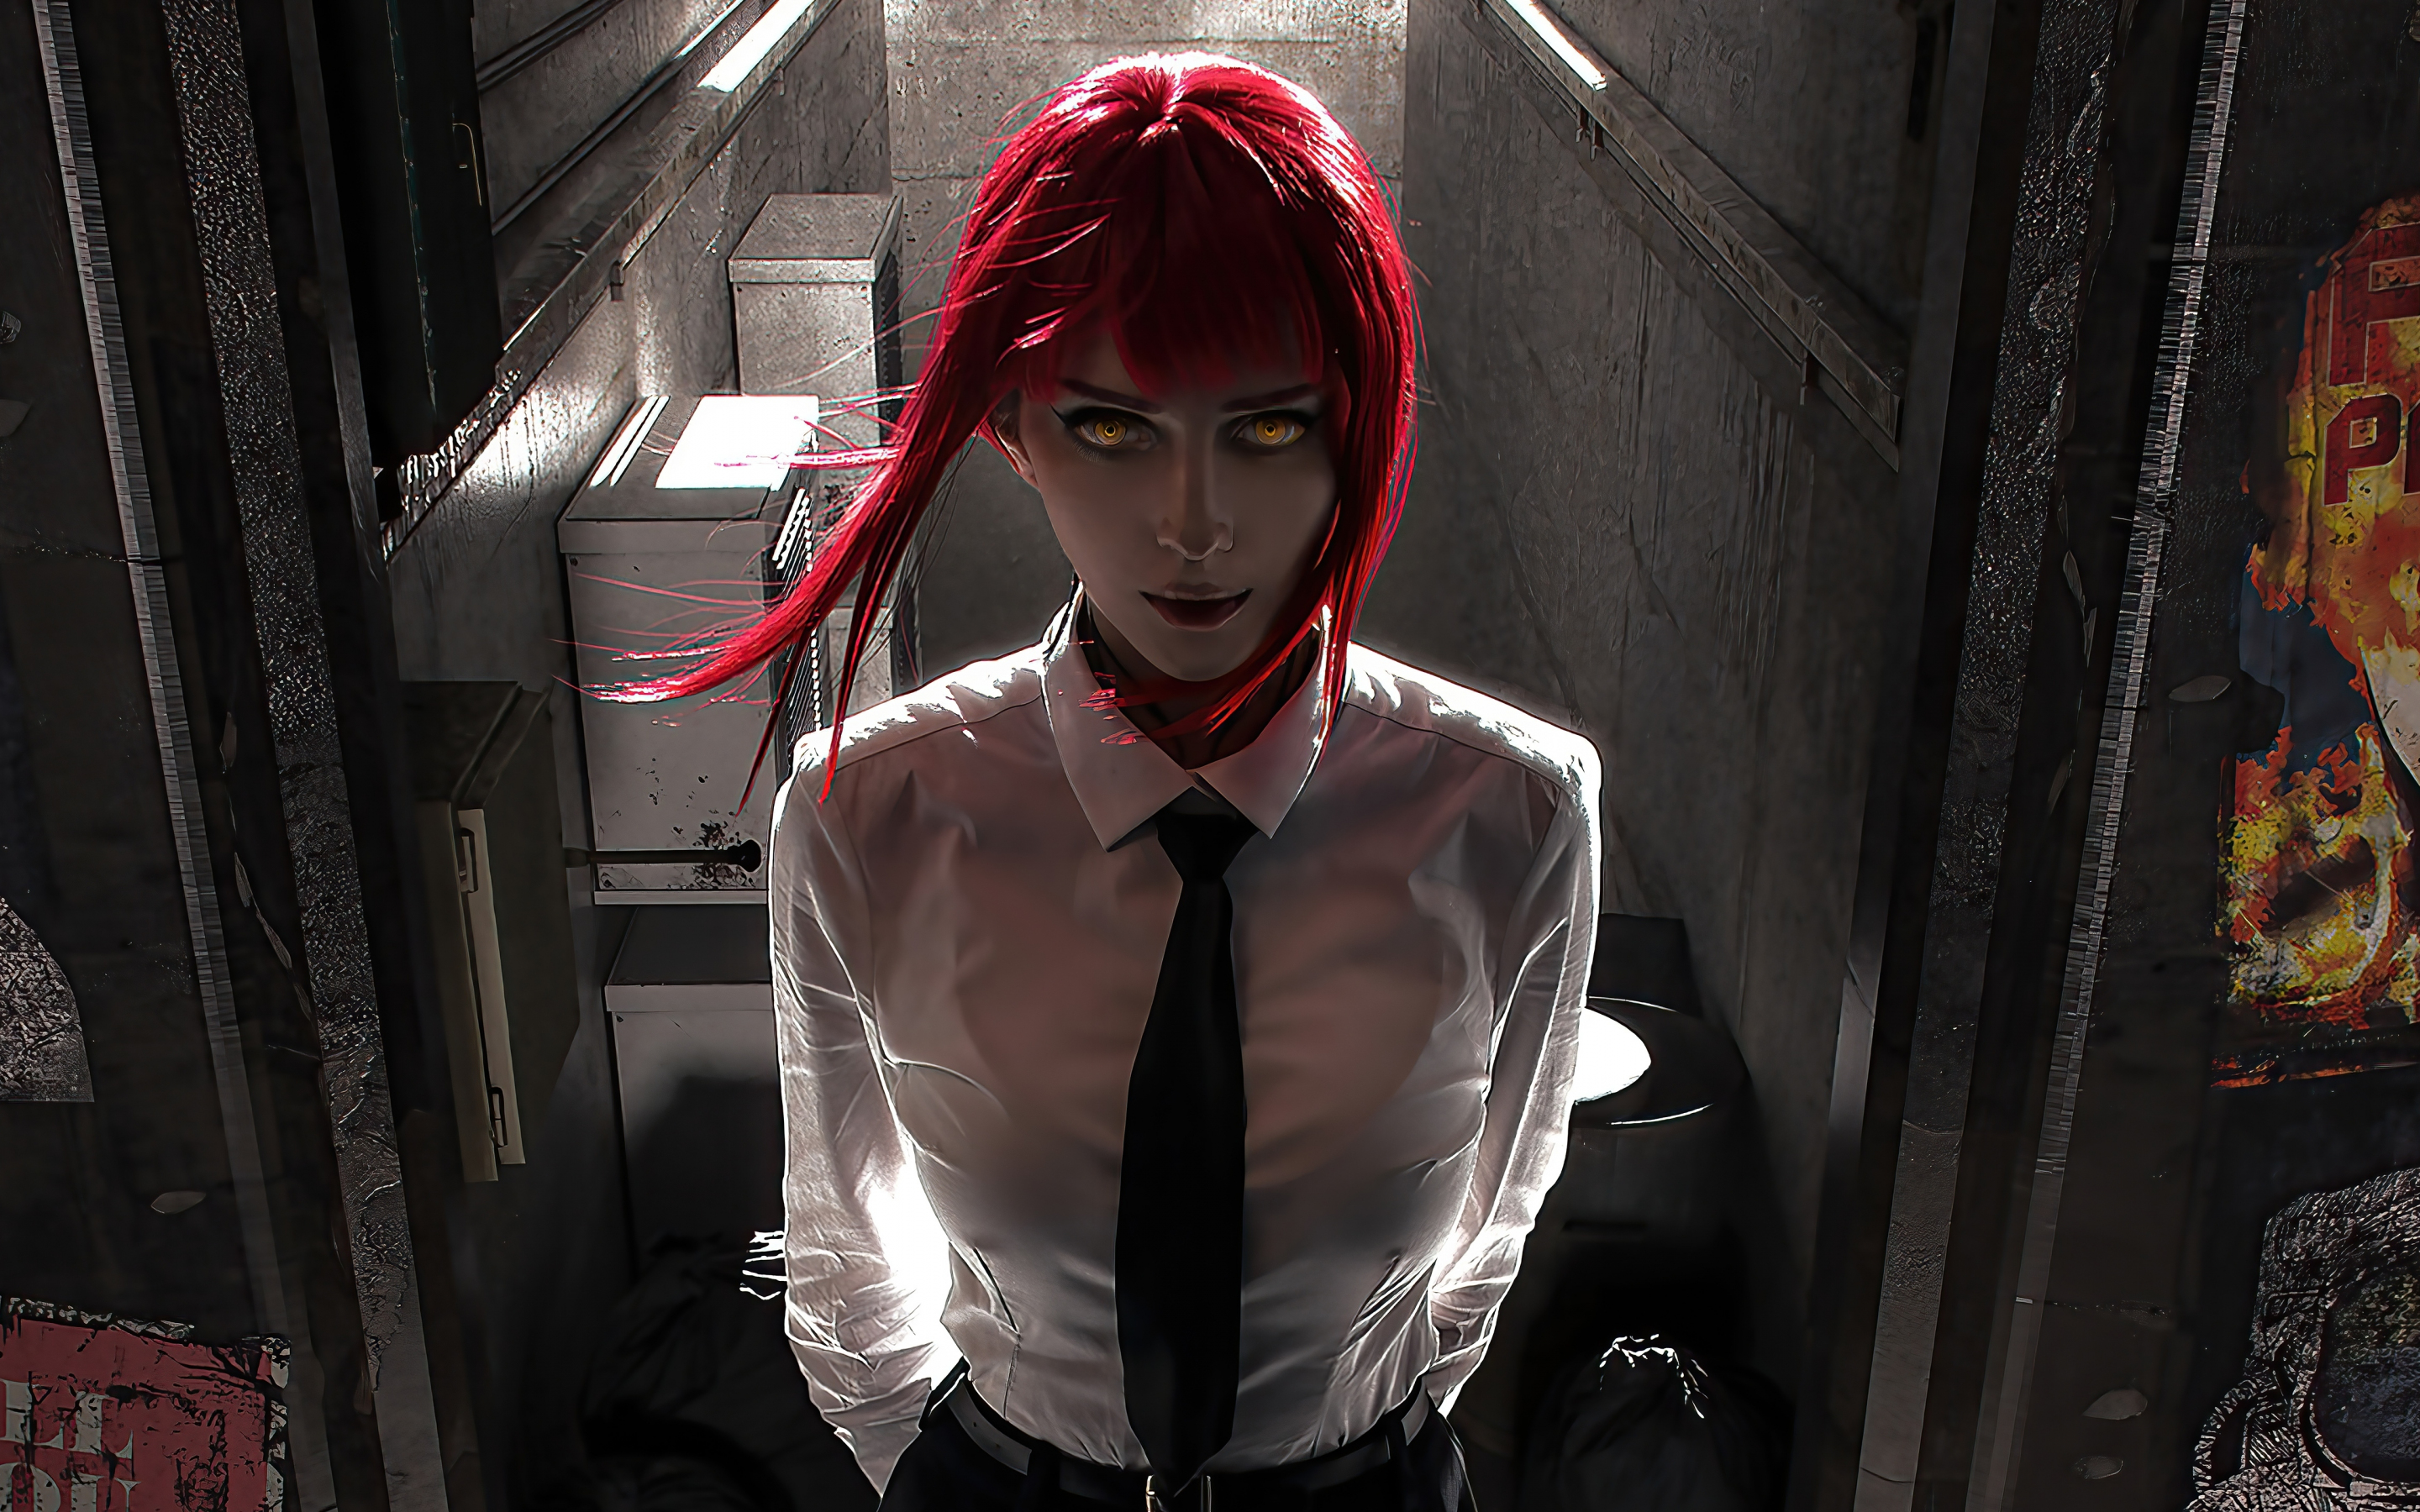 Redhead girl model, cosplay, glowing eyes, art, 2880x1800 wallpaper